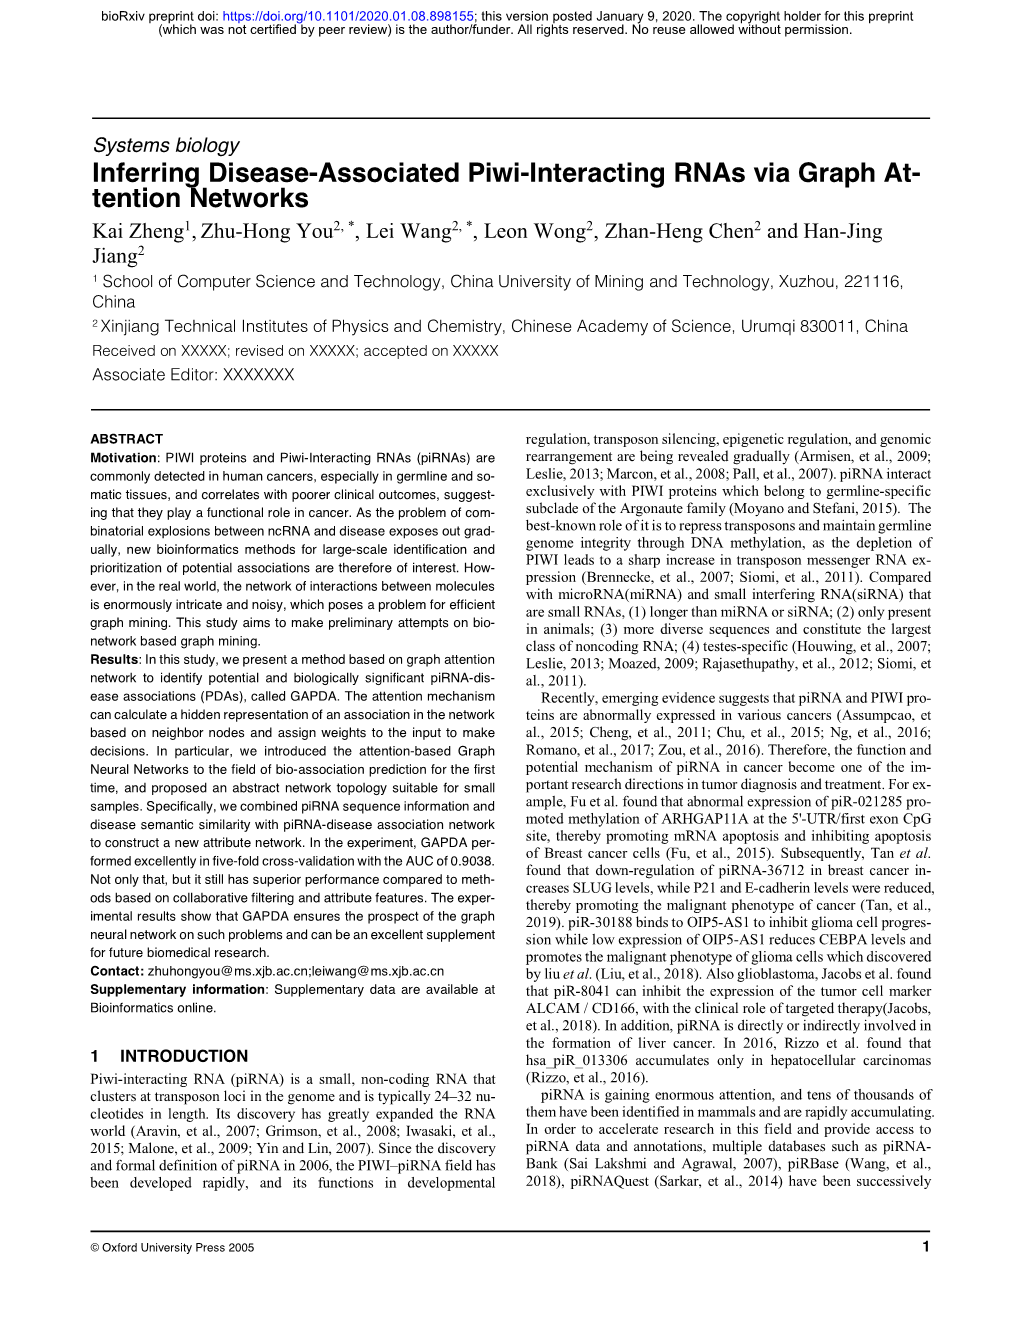 Inferring Disease-Associated Piwi-Interacting Rnas Via Graph